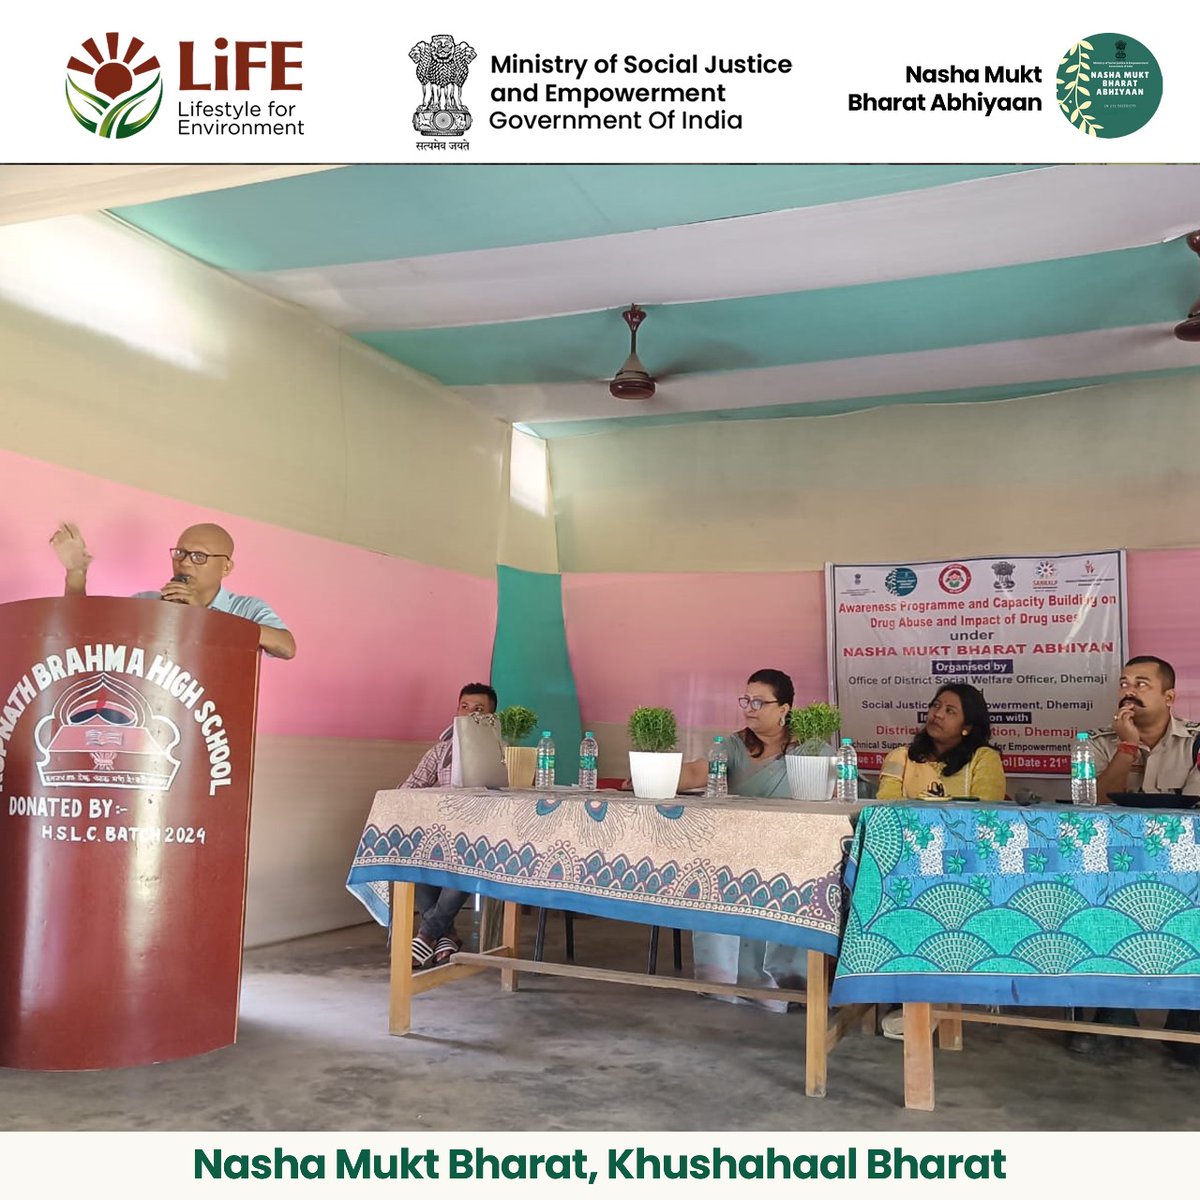 Under NMBA, an Awareness and Capacity Building on Drug abuse was organised forbthe students in
Dhemaji, Assam. @Drvirendrakum13 @MSJEGOI @SMILE_MoSJE @_saurabhgarg @UNODC @NITIAayog @HMOIndia #nmba #drugfreeindia